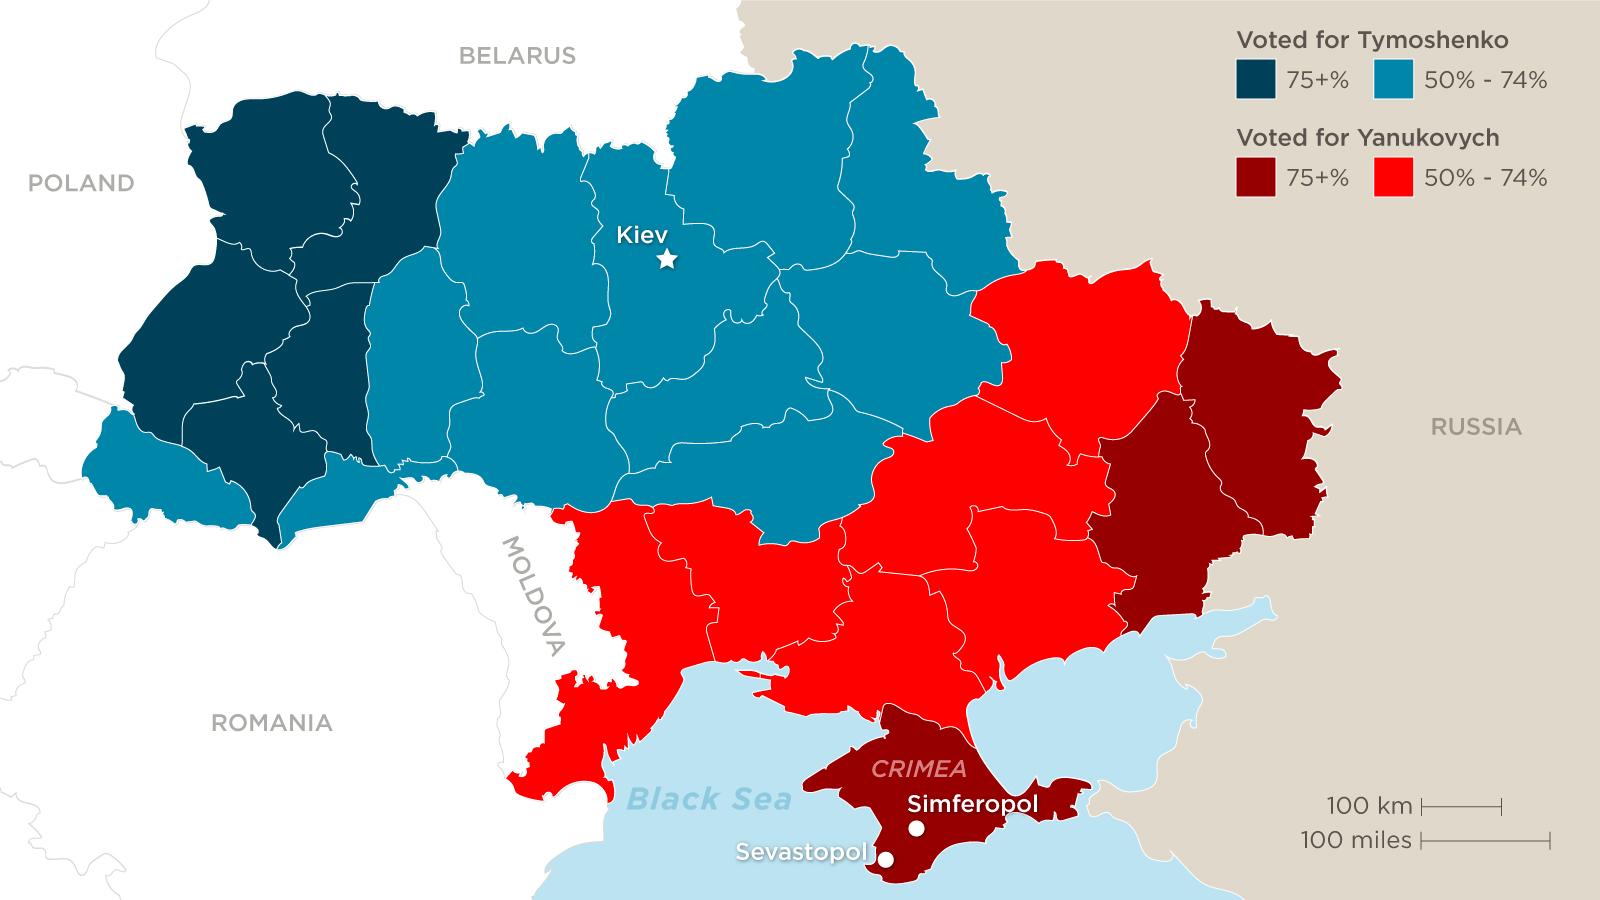 ukraine map 2020